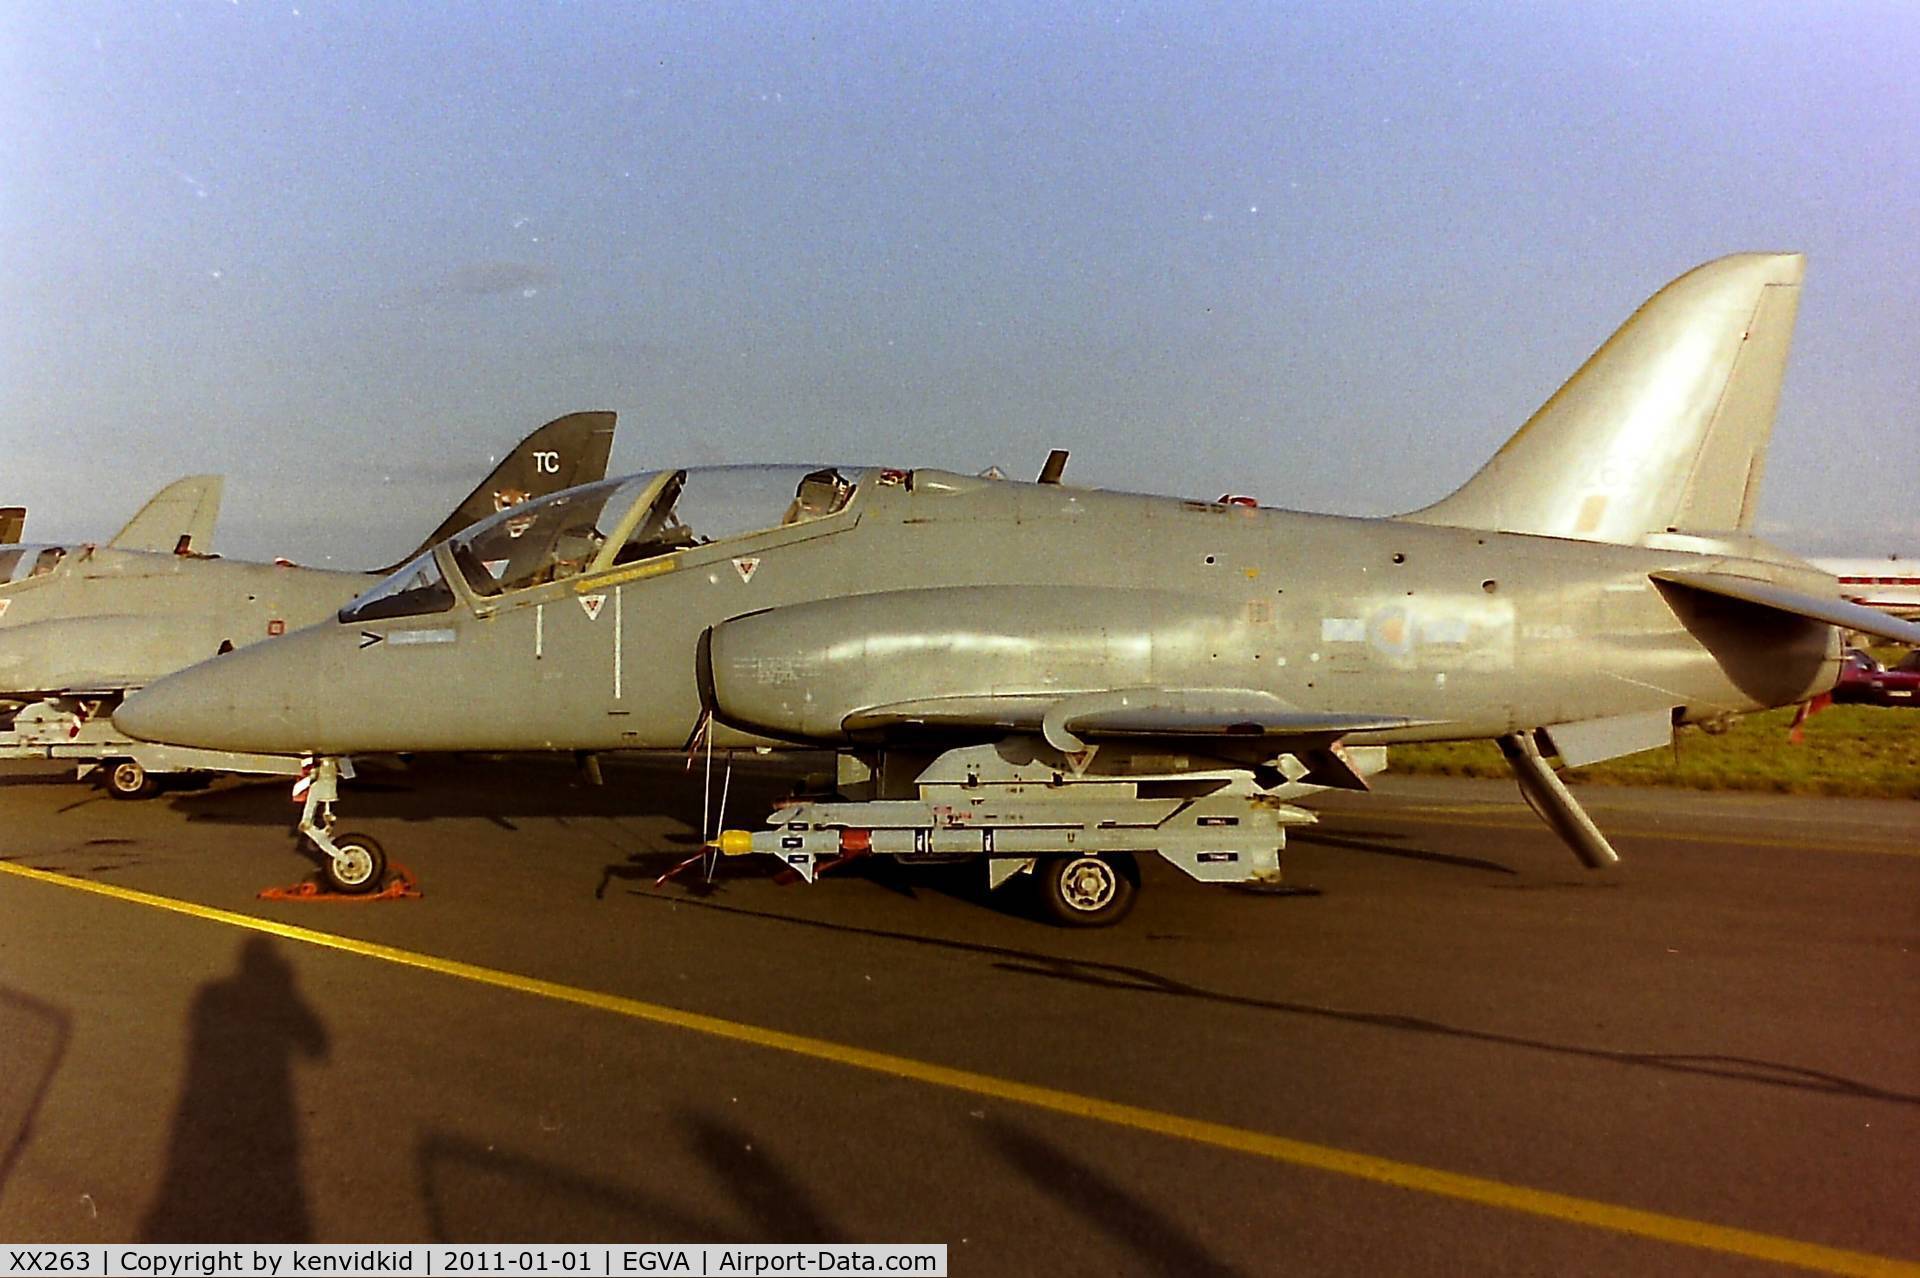 XX263, 1978 Hawker Siddeley Hawk T.1A C/N 099/312099, At RIAT 1993, scanned from negative.